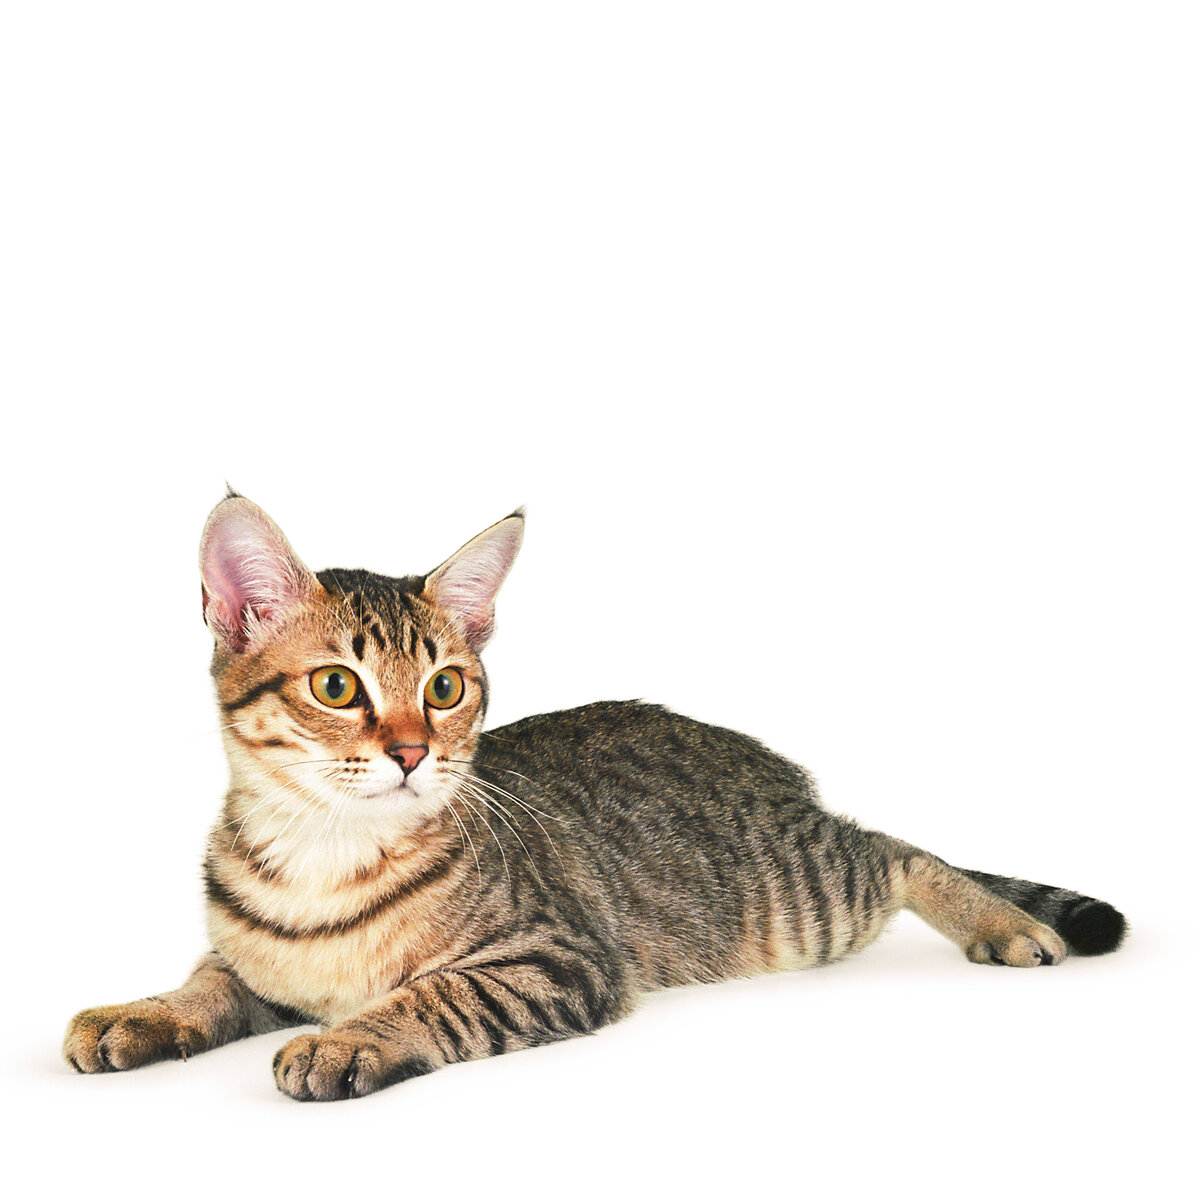 ᐉ азиатская табби: описание и характеристика породы кошек, правила ухода и питания - kcc-zoo.ru